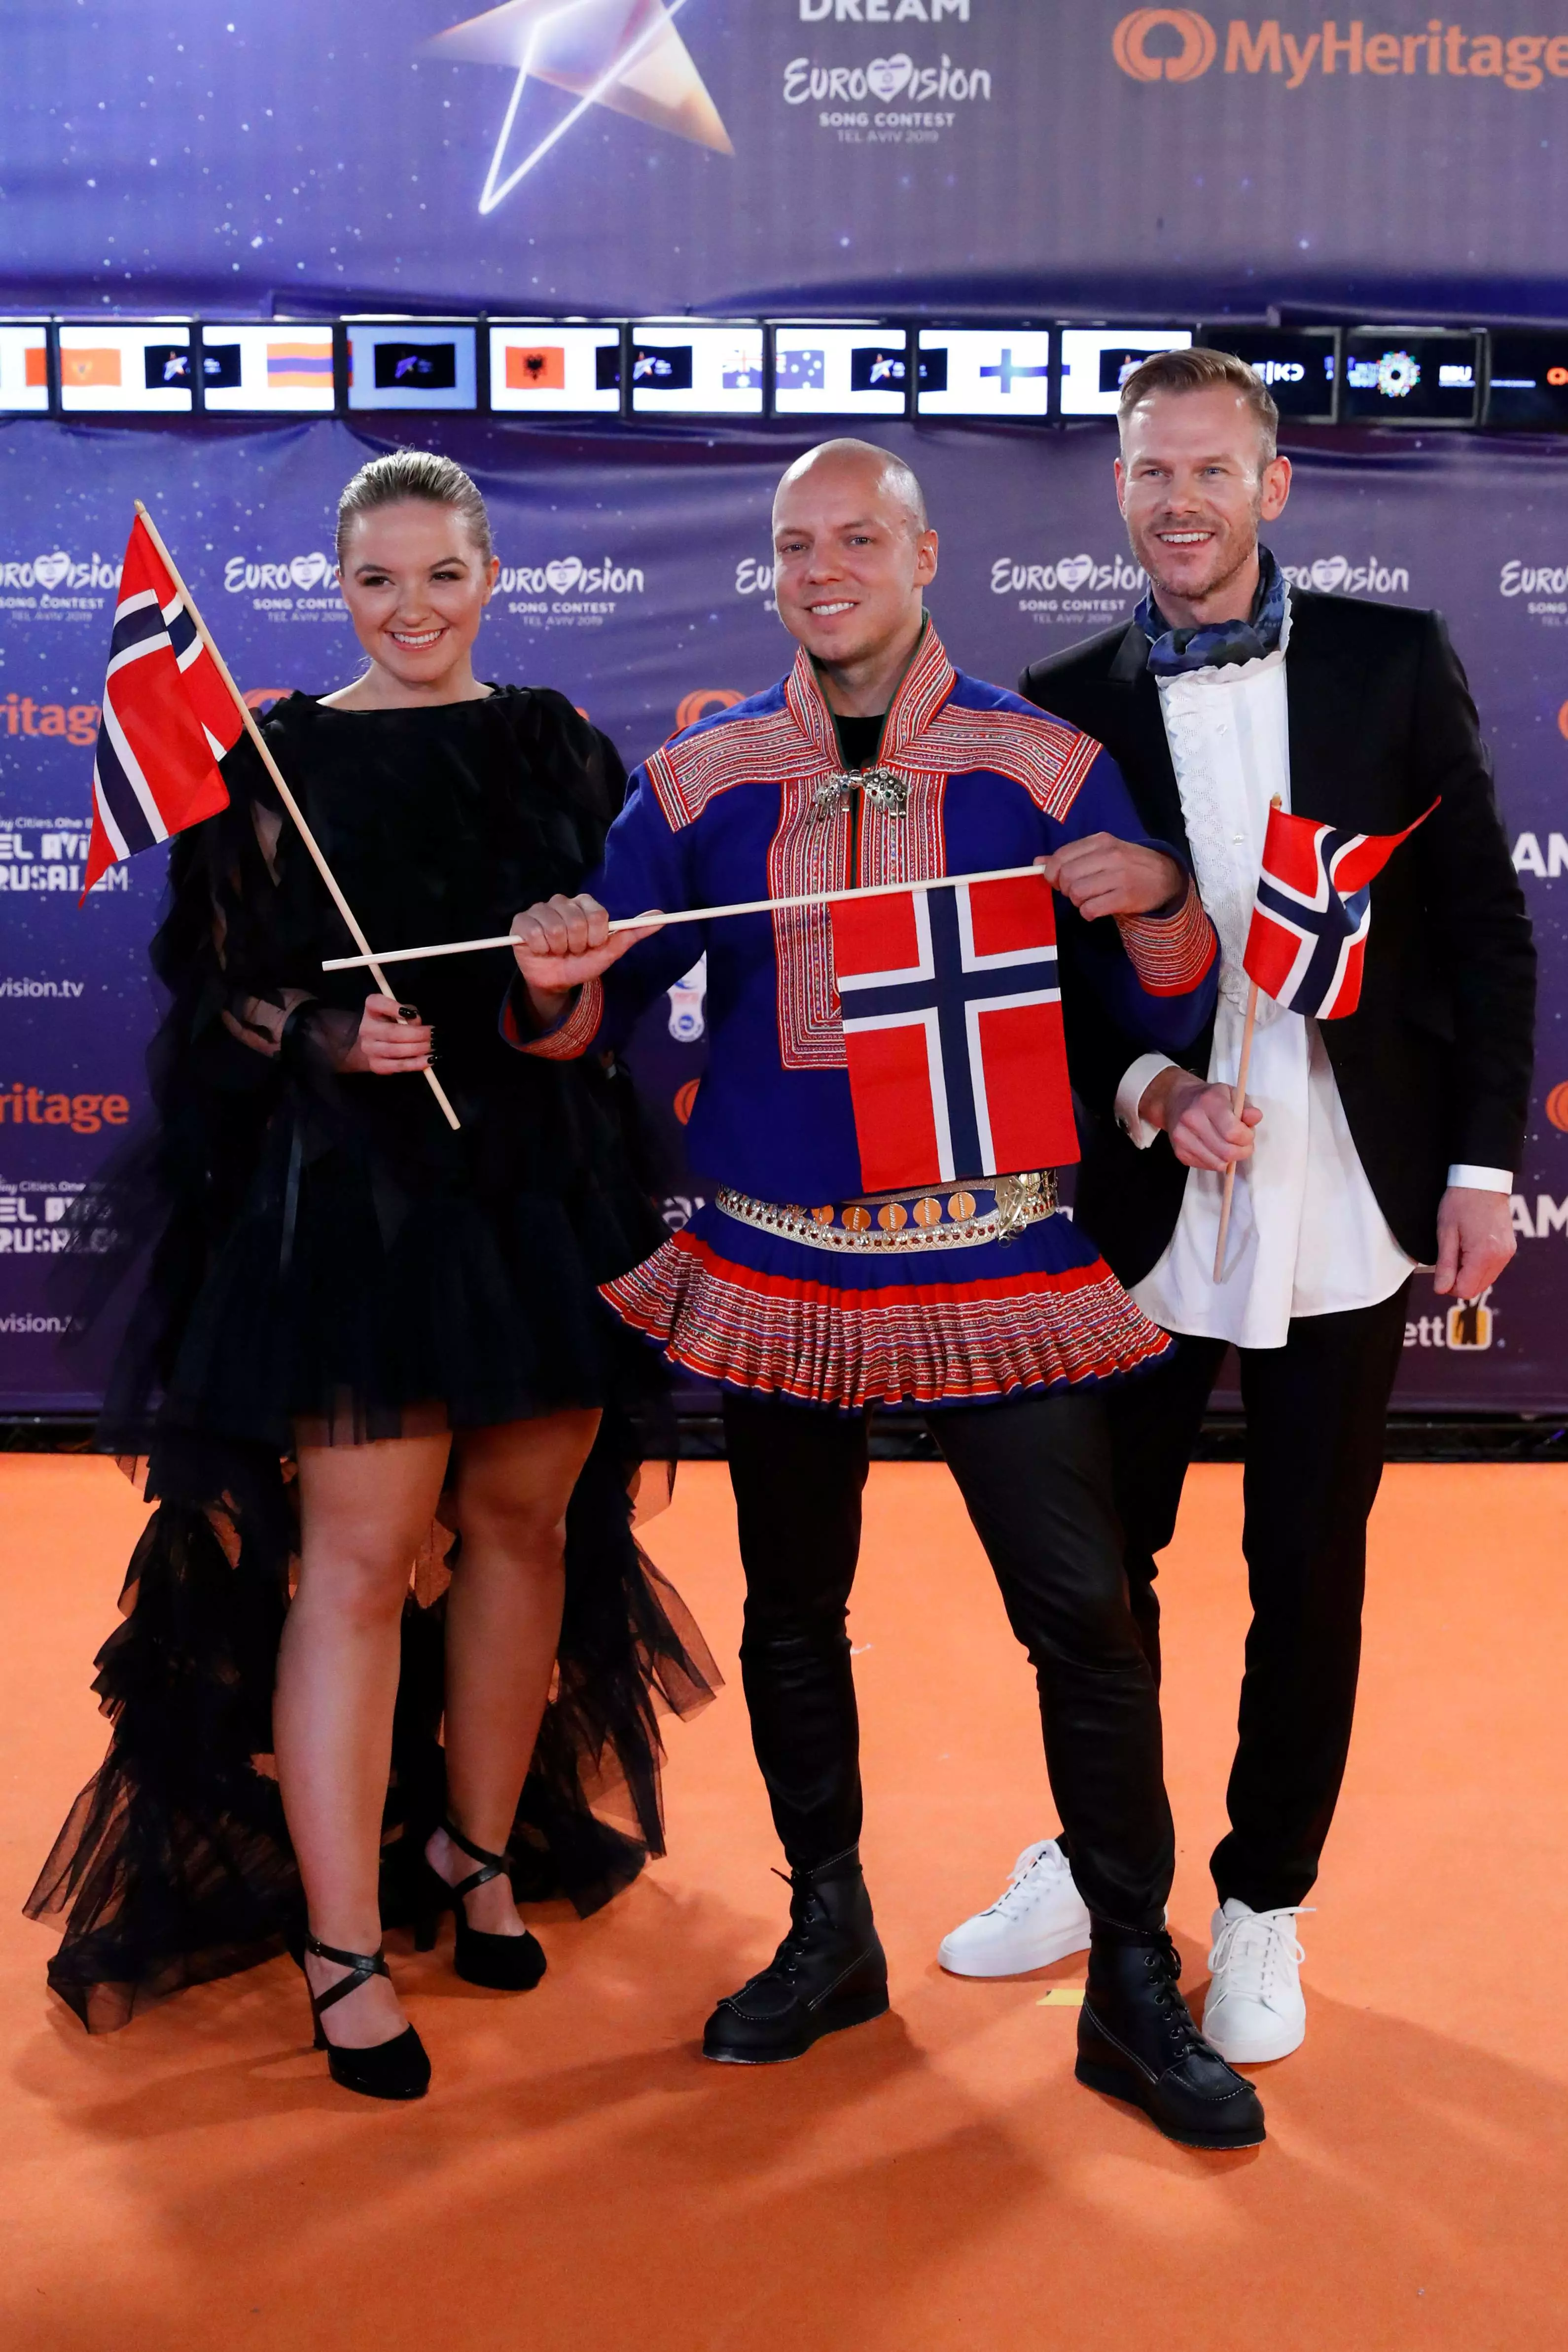 Норвежская группа Keiino